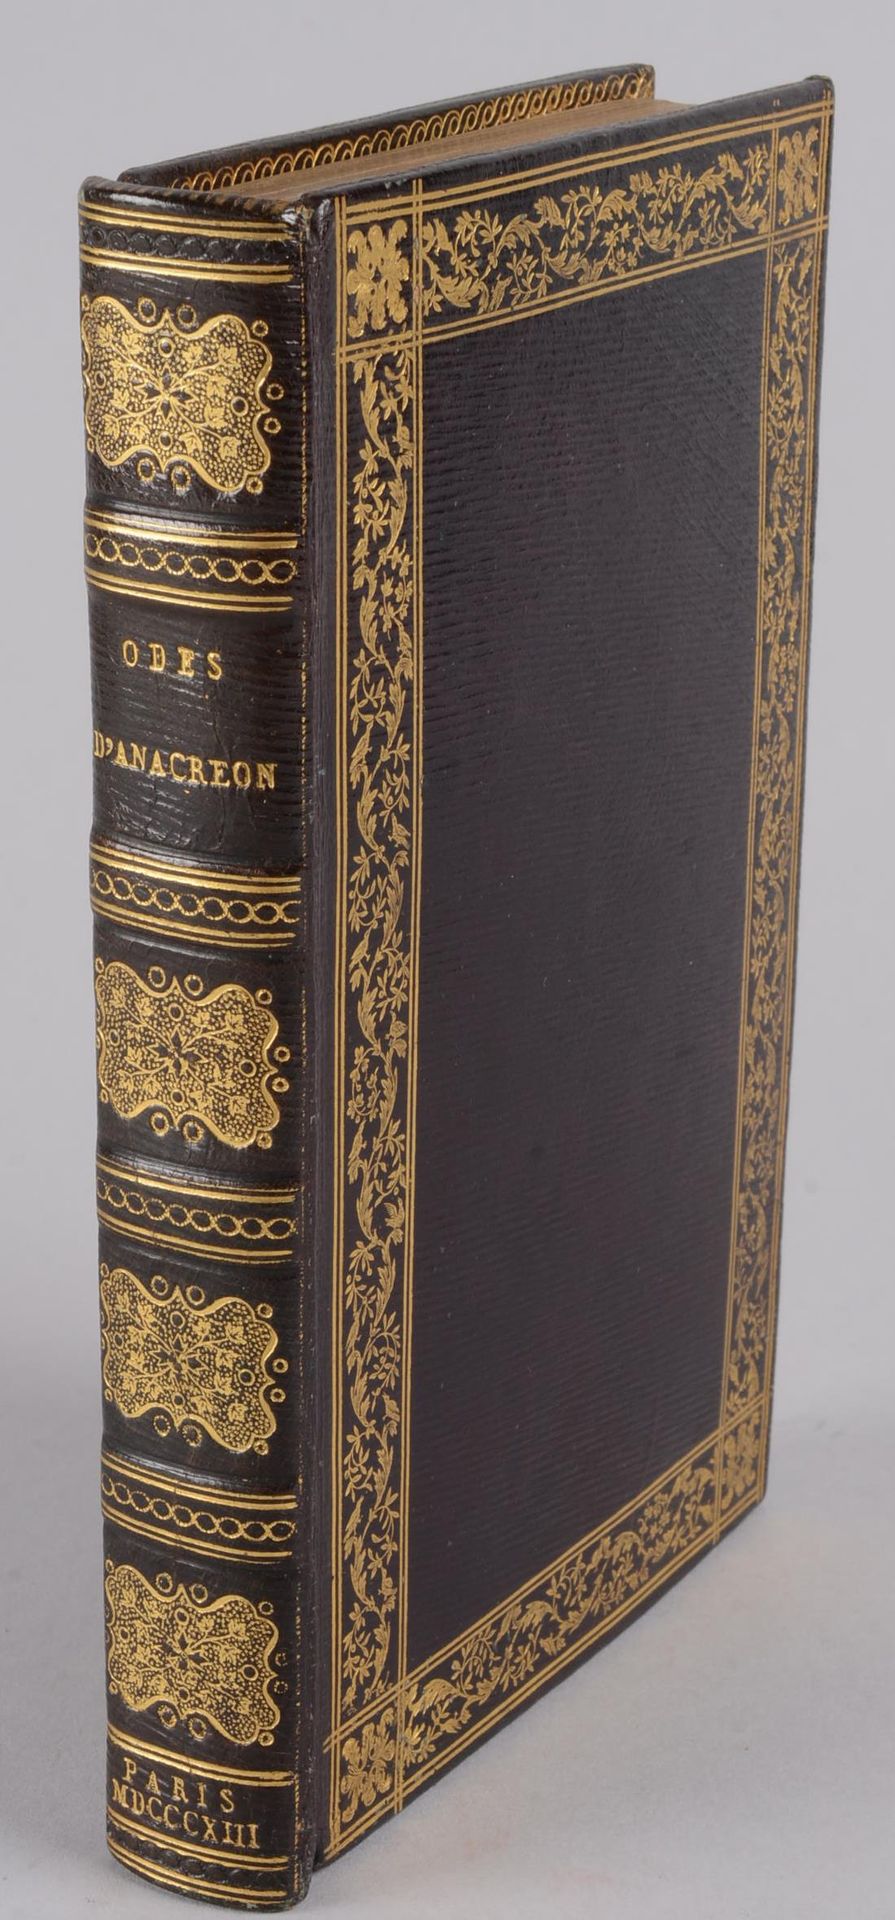 ANACREON ANACREON



 Odes of Anacreon



 Paris, by H. Nicolle, 1813



 Small &hellip;